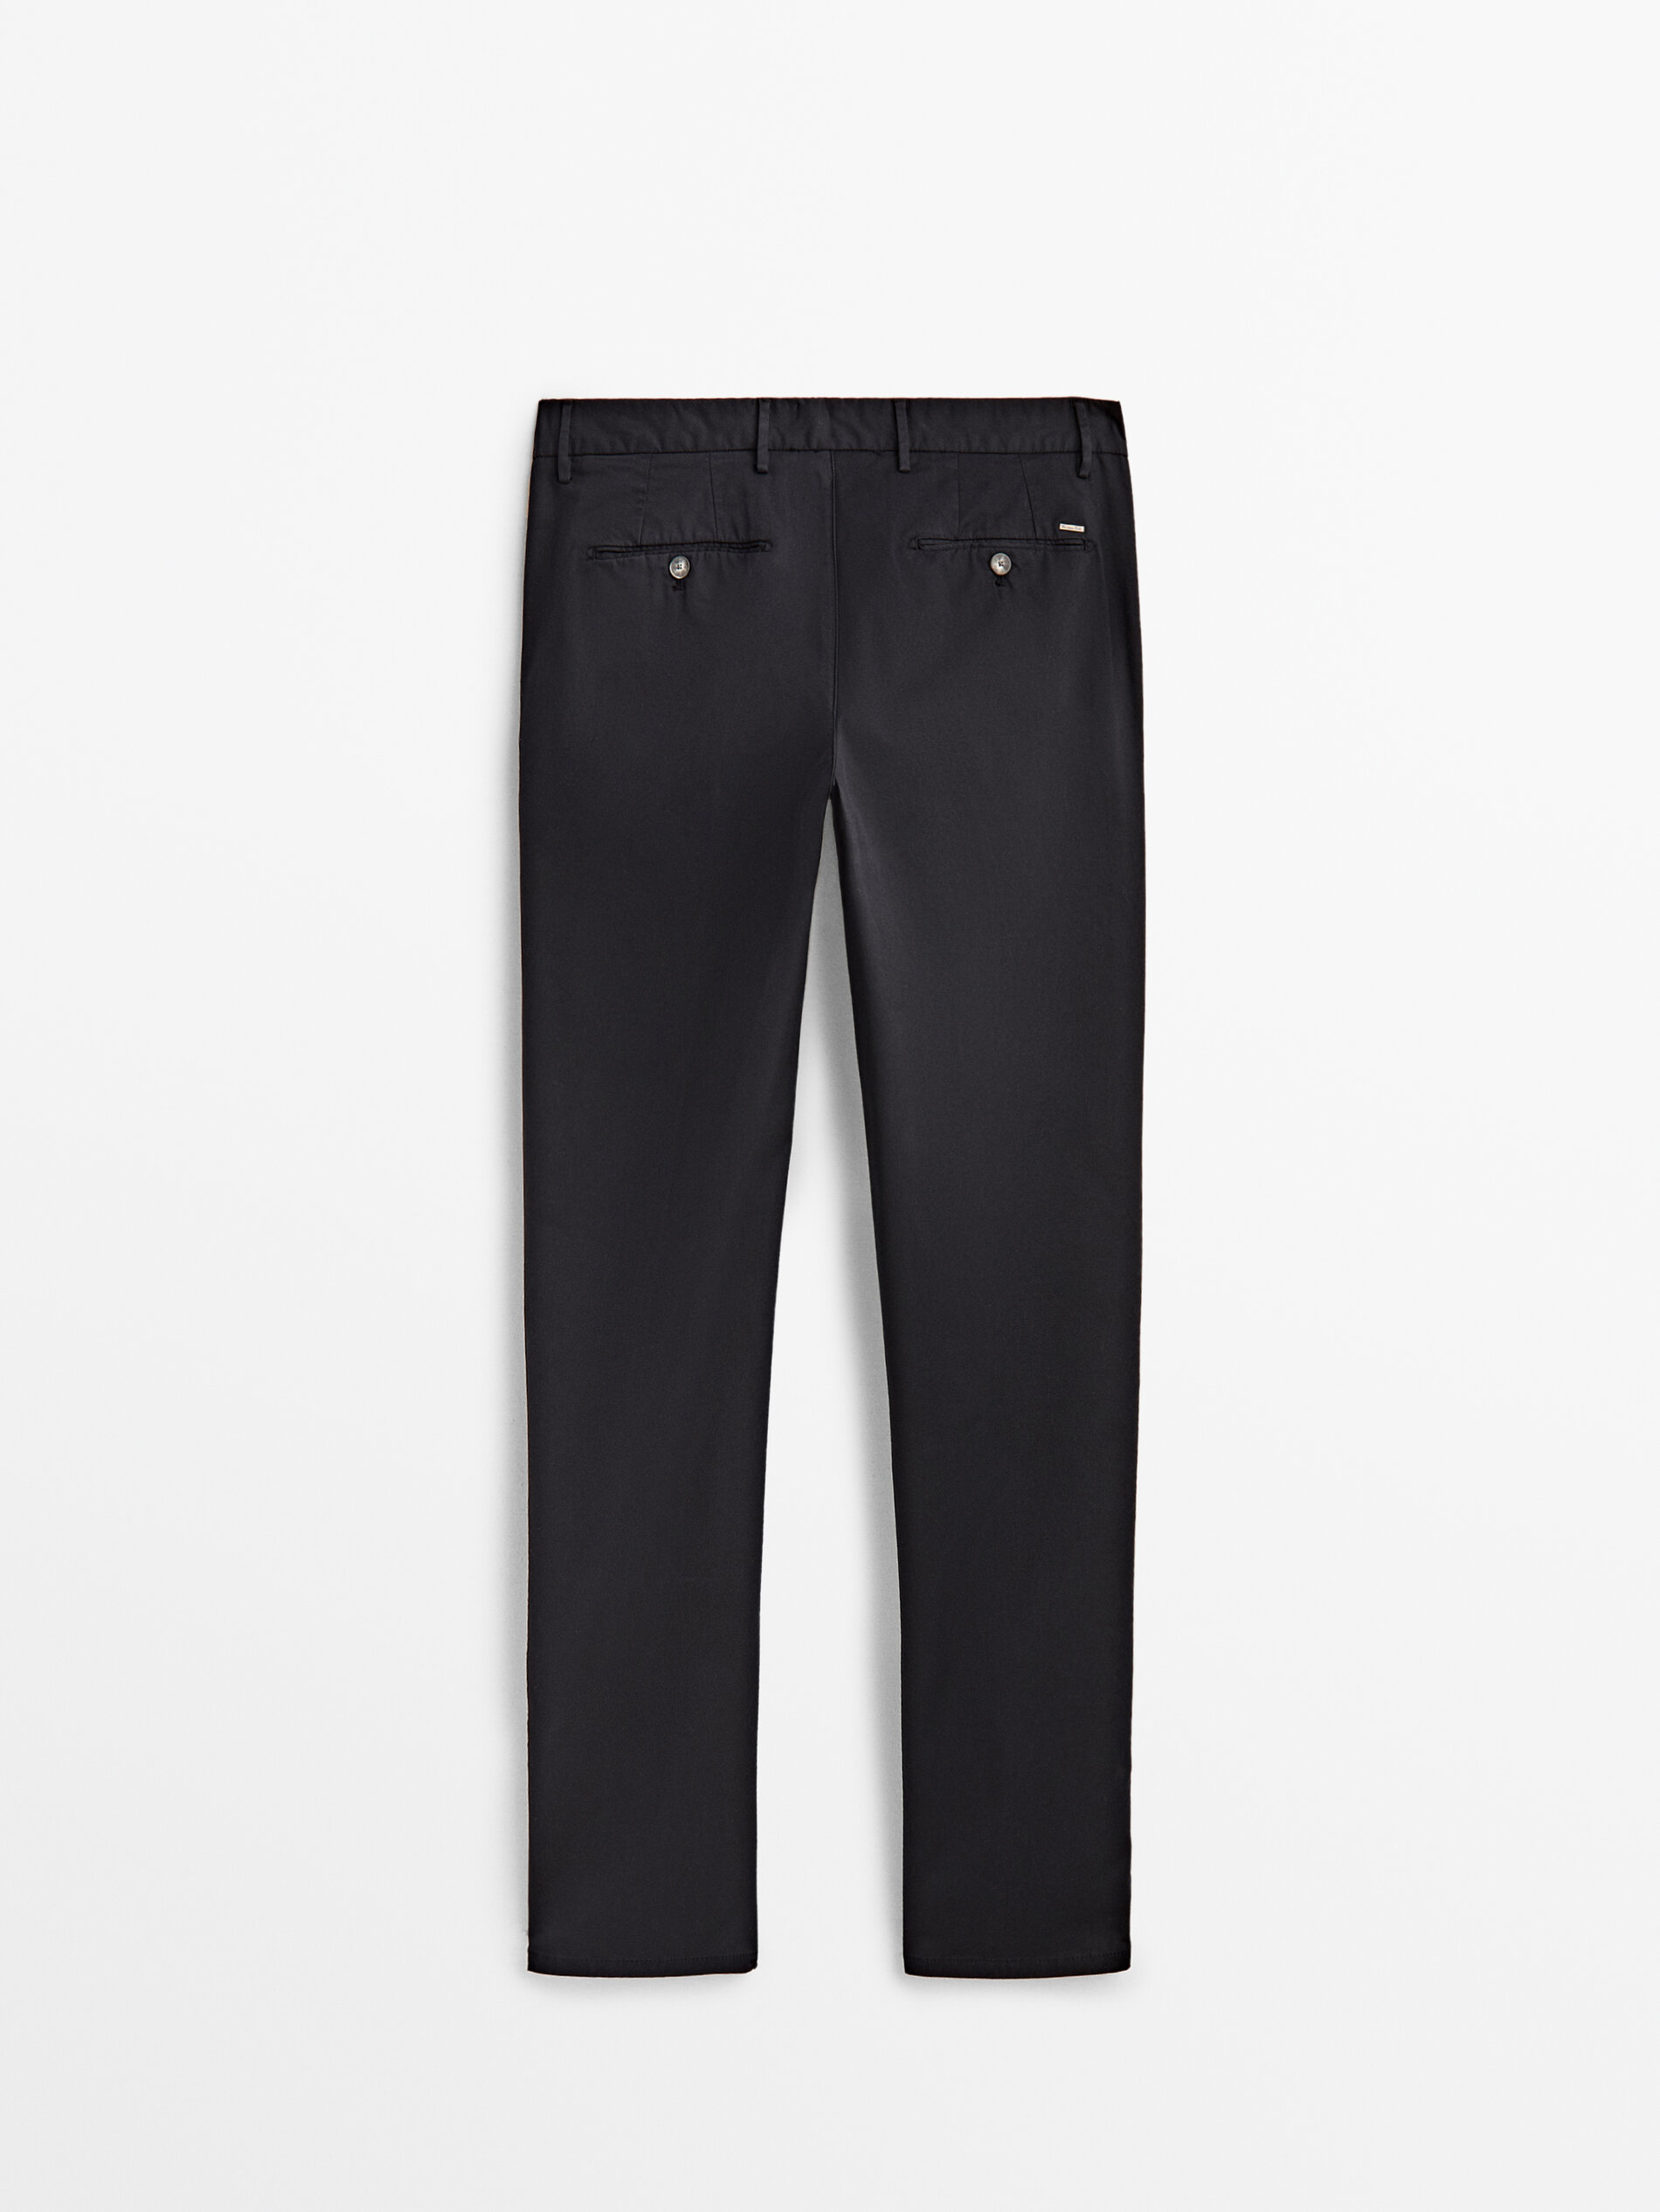 Slim fit cotton blend chino trousers · Navy Blue, Khaki, Beige